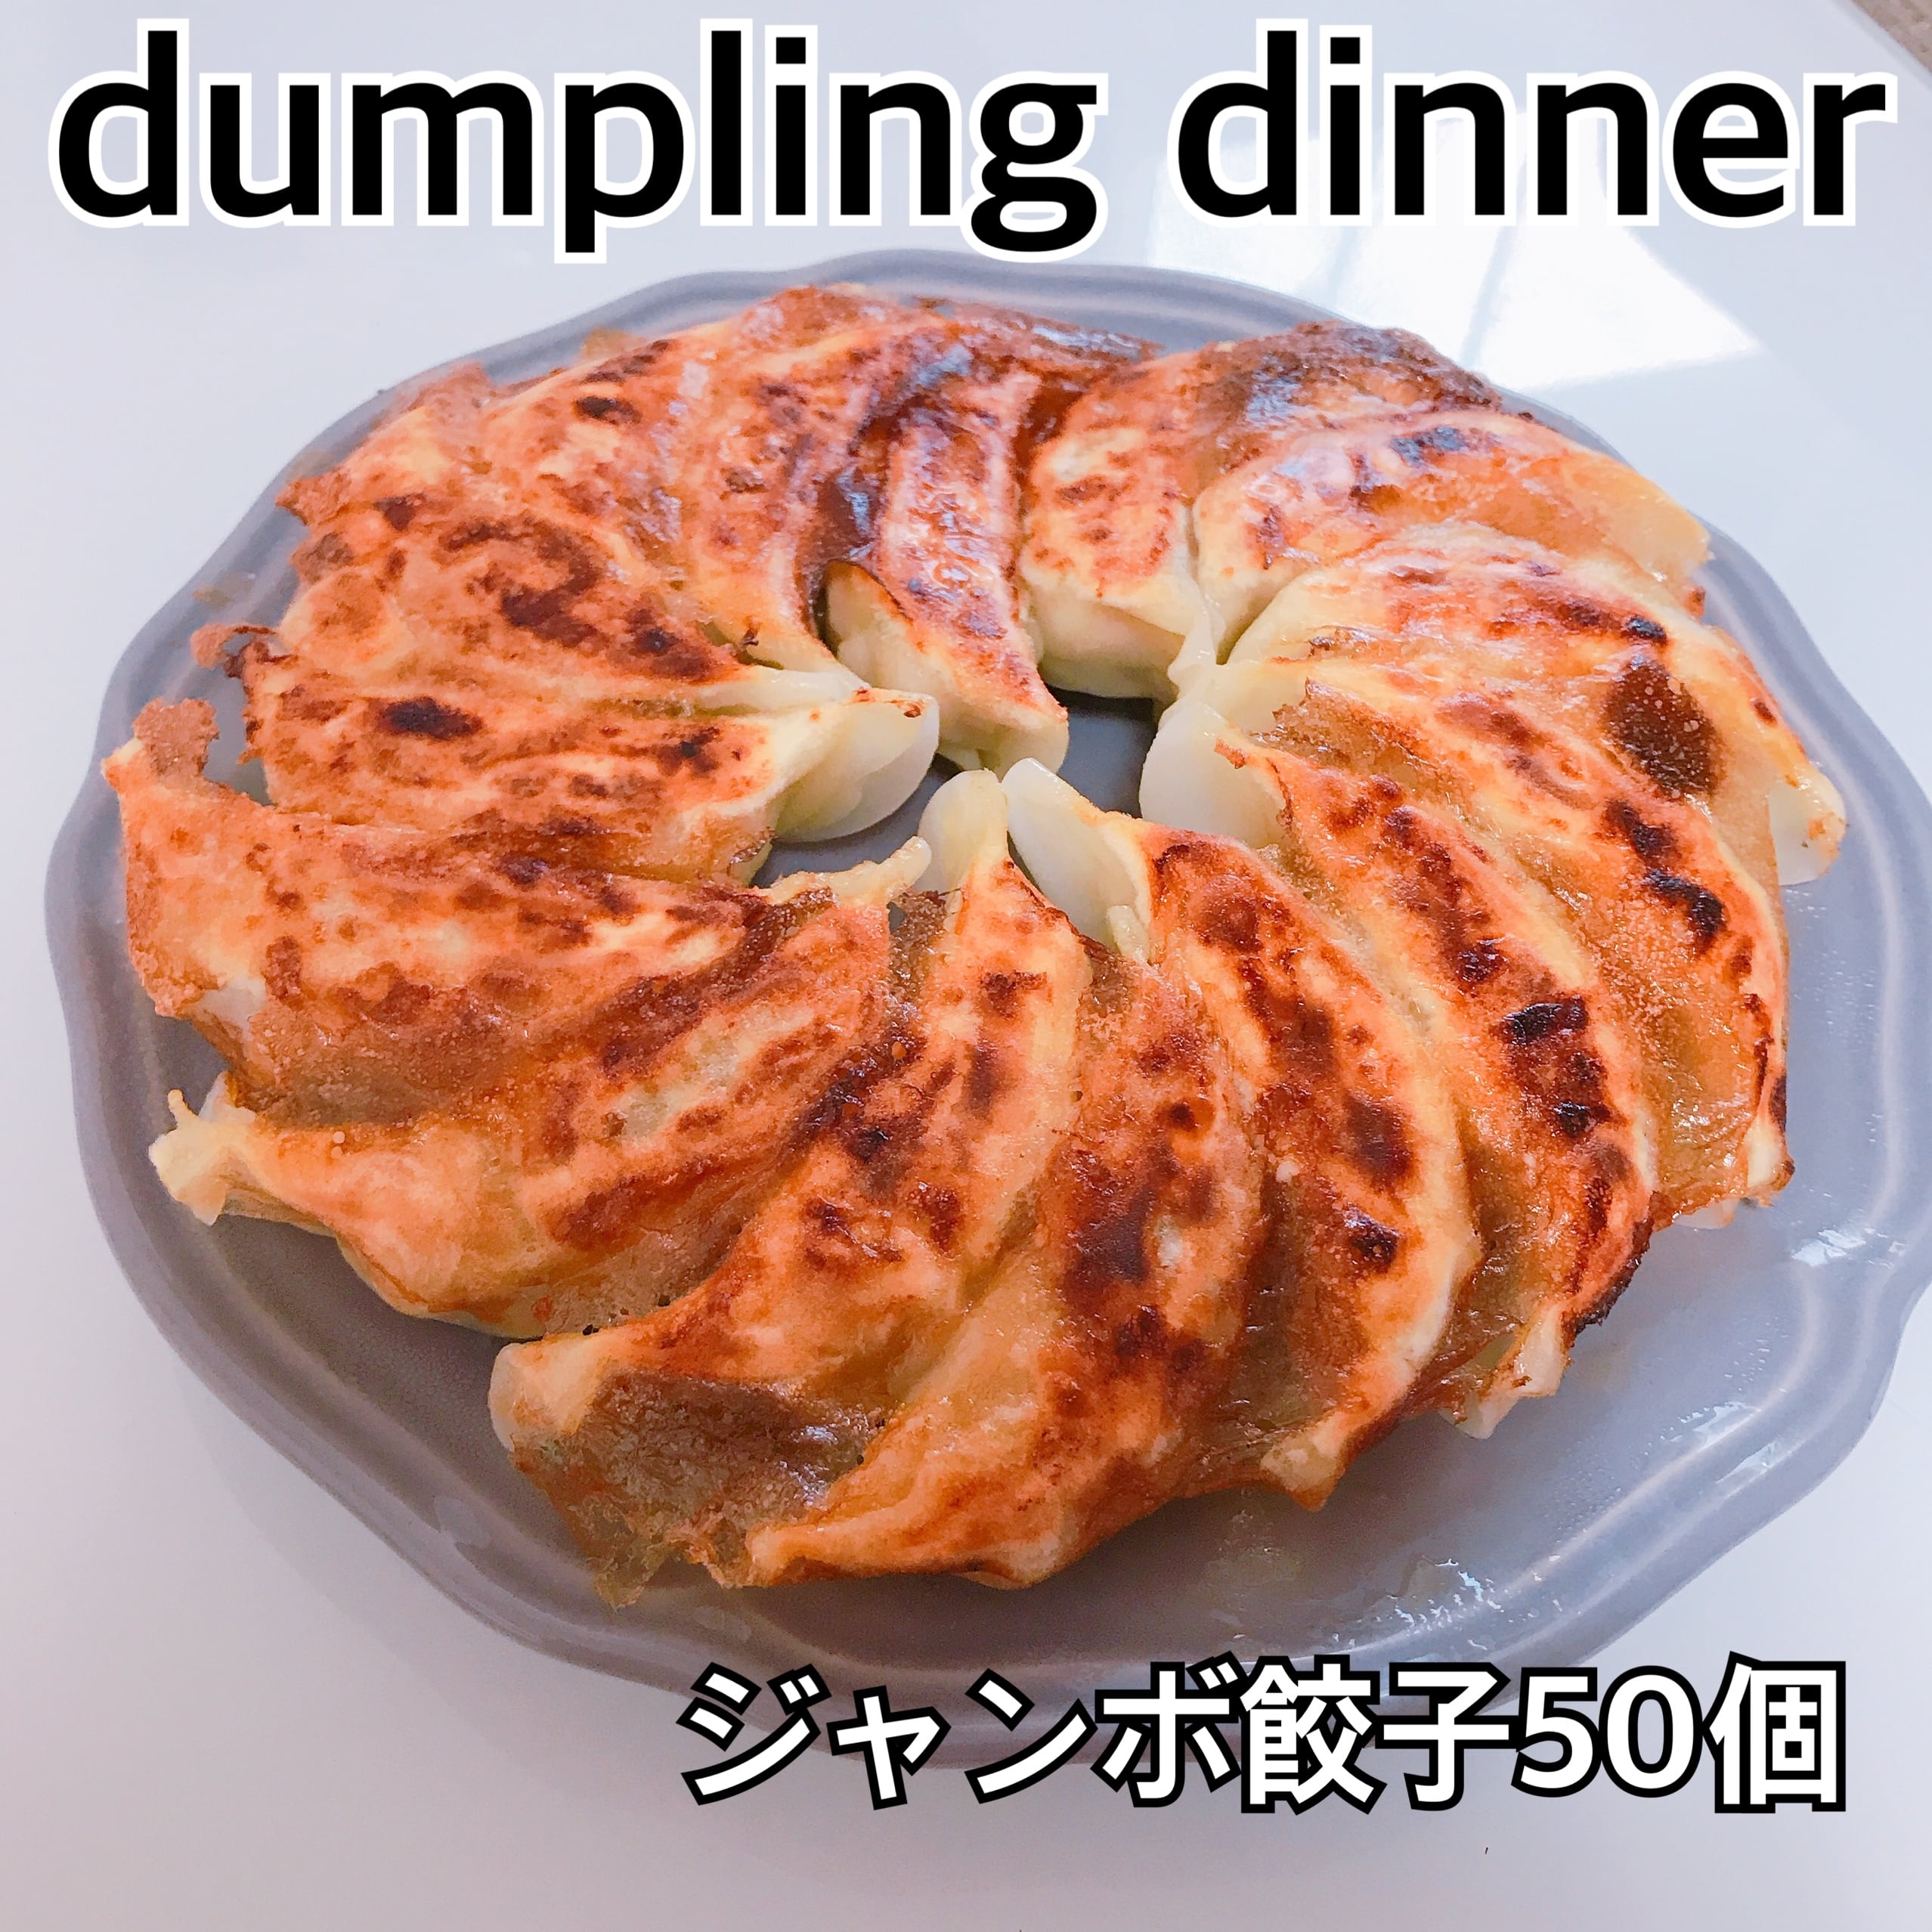 dumpling　1セット　ジャンボ餃子　冷凍餃子　50個入り　dinner